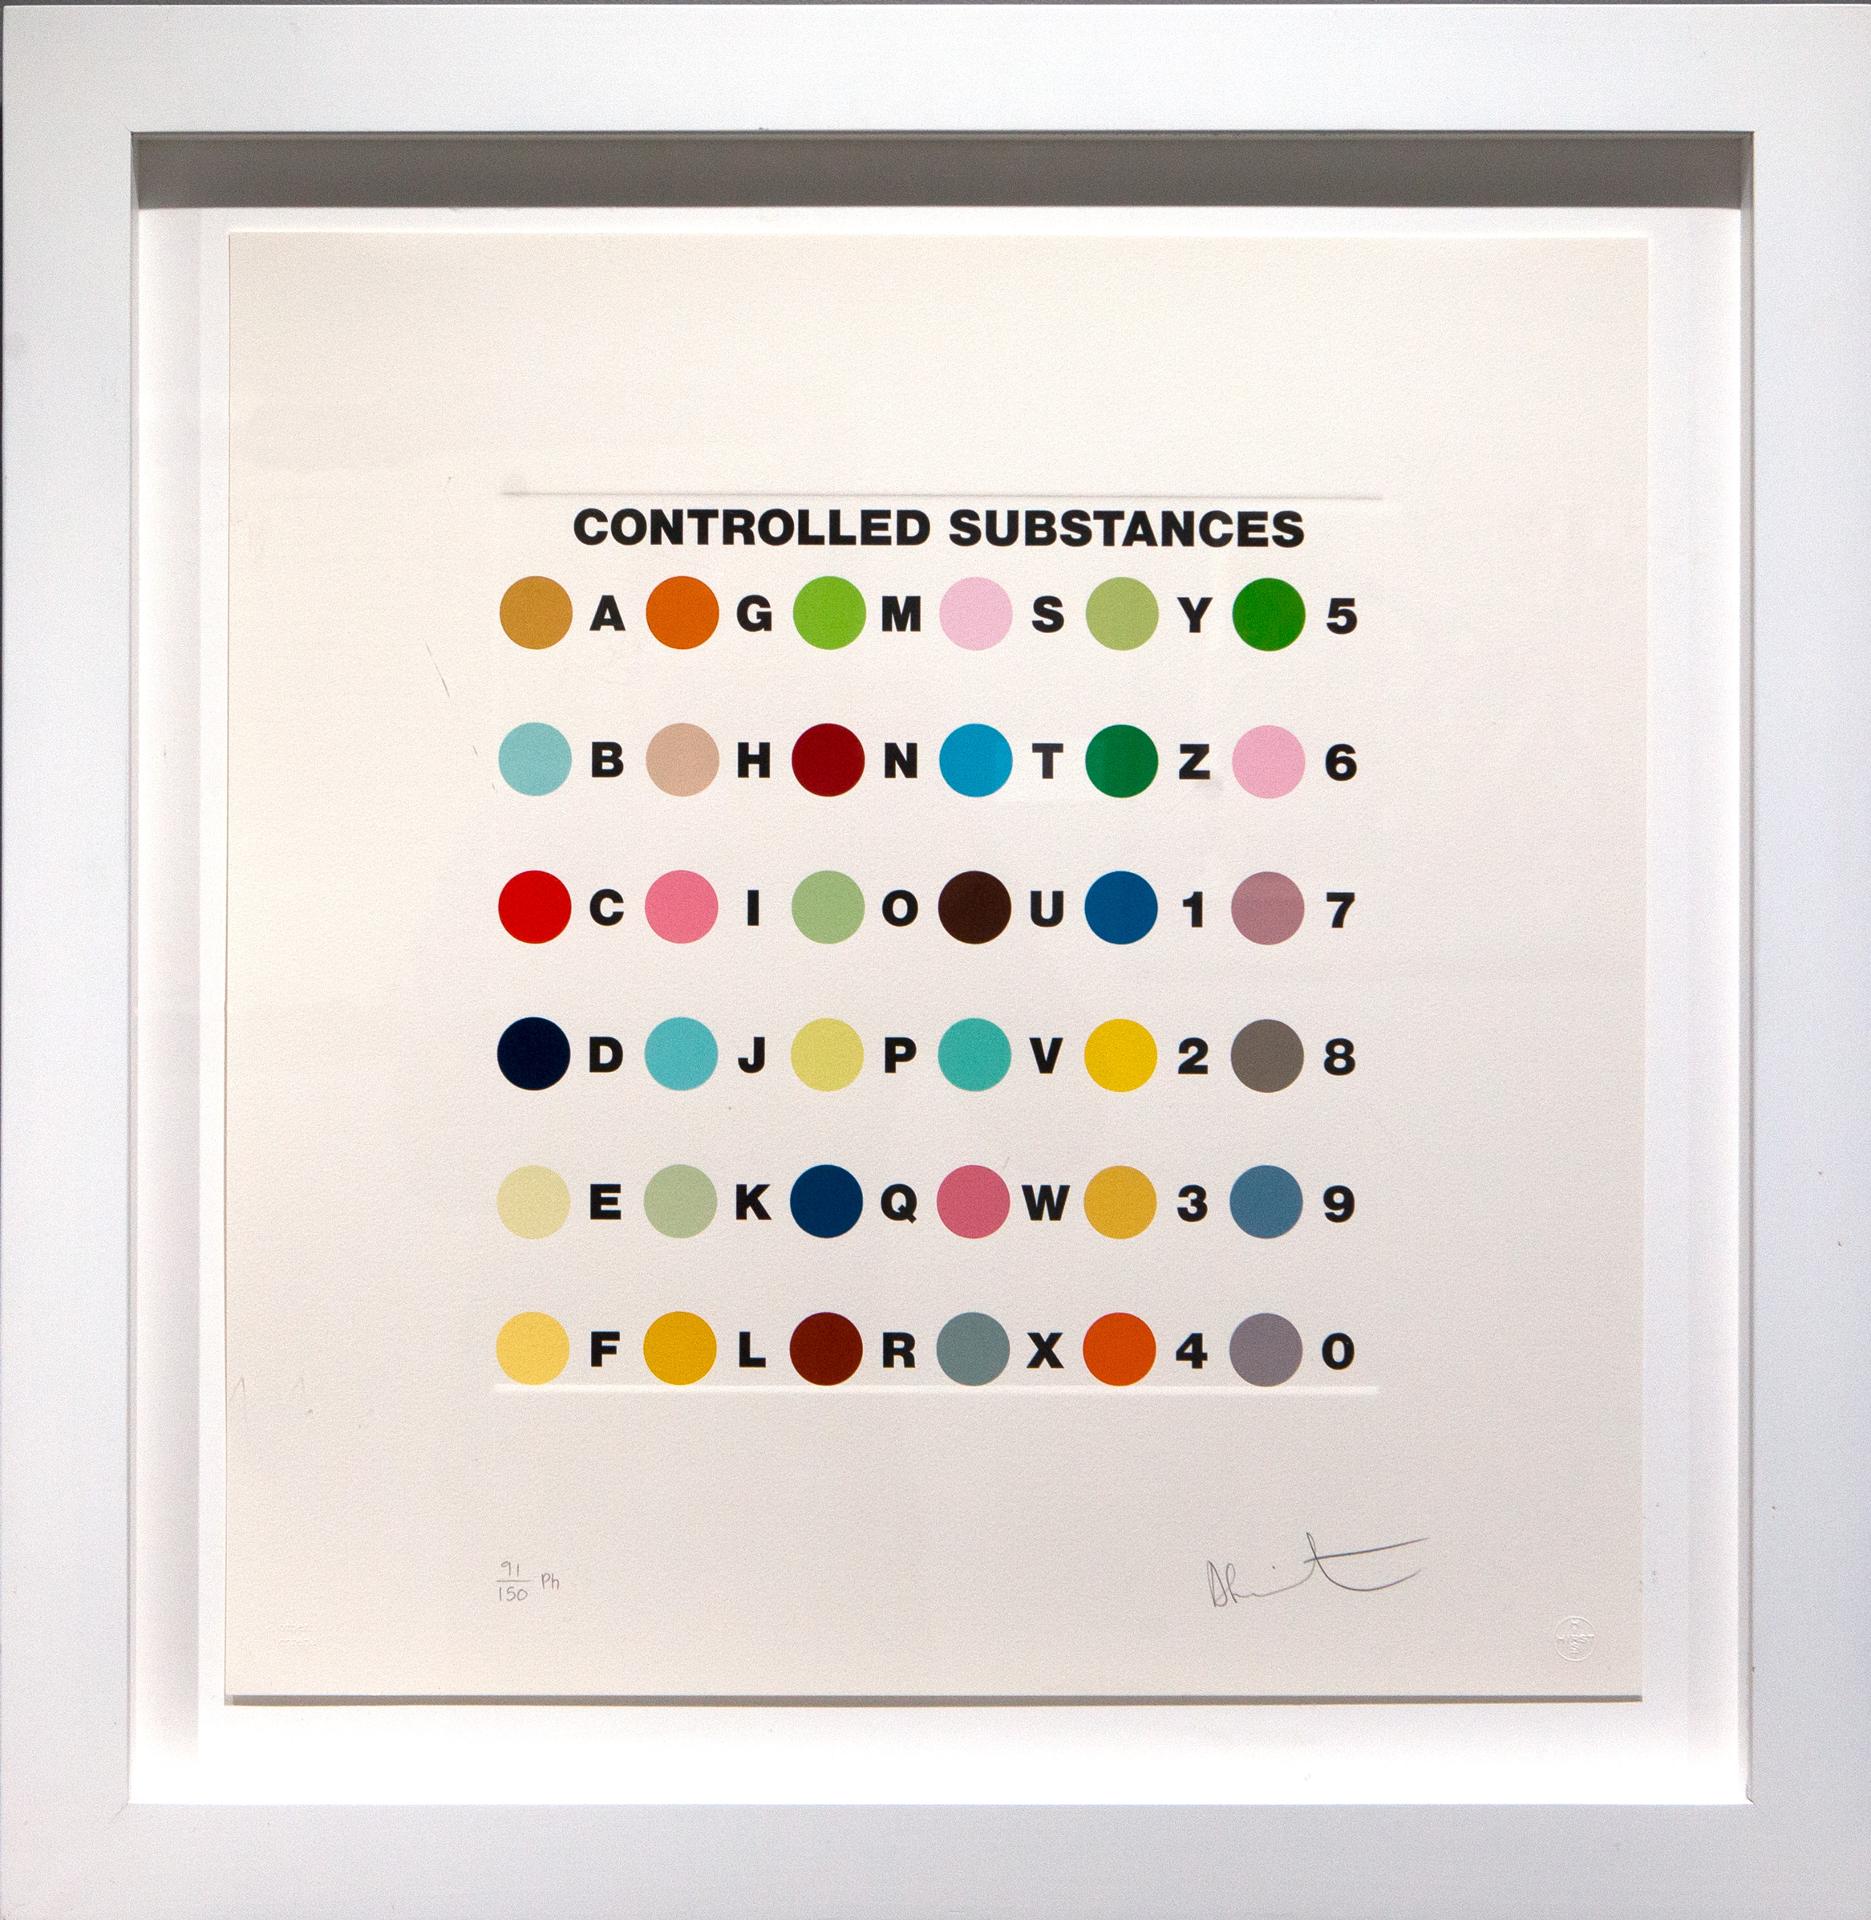 Damien Hirst (1965) - Controlled Substances Key Spot Print, 2011